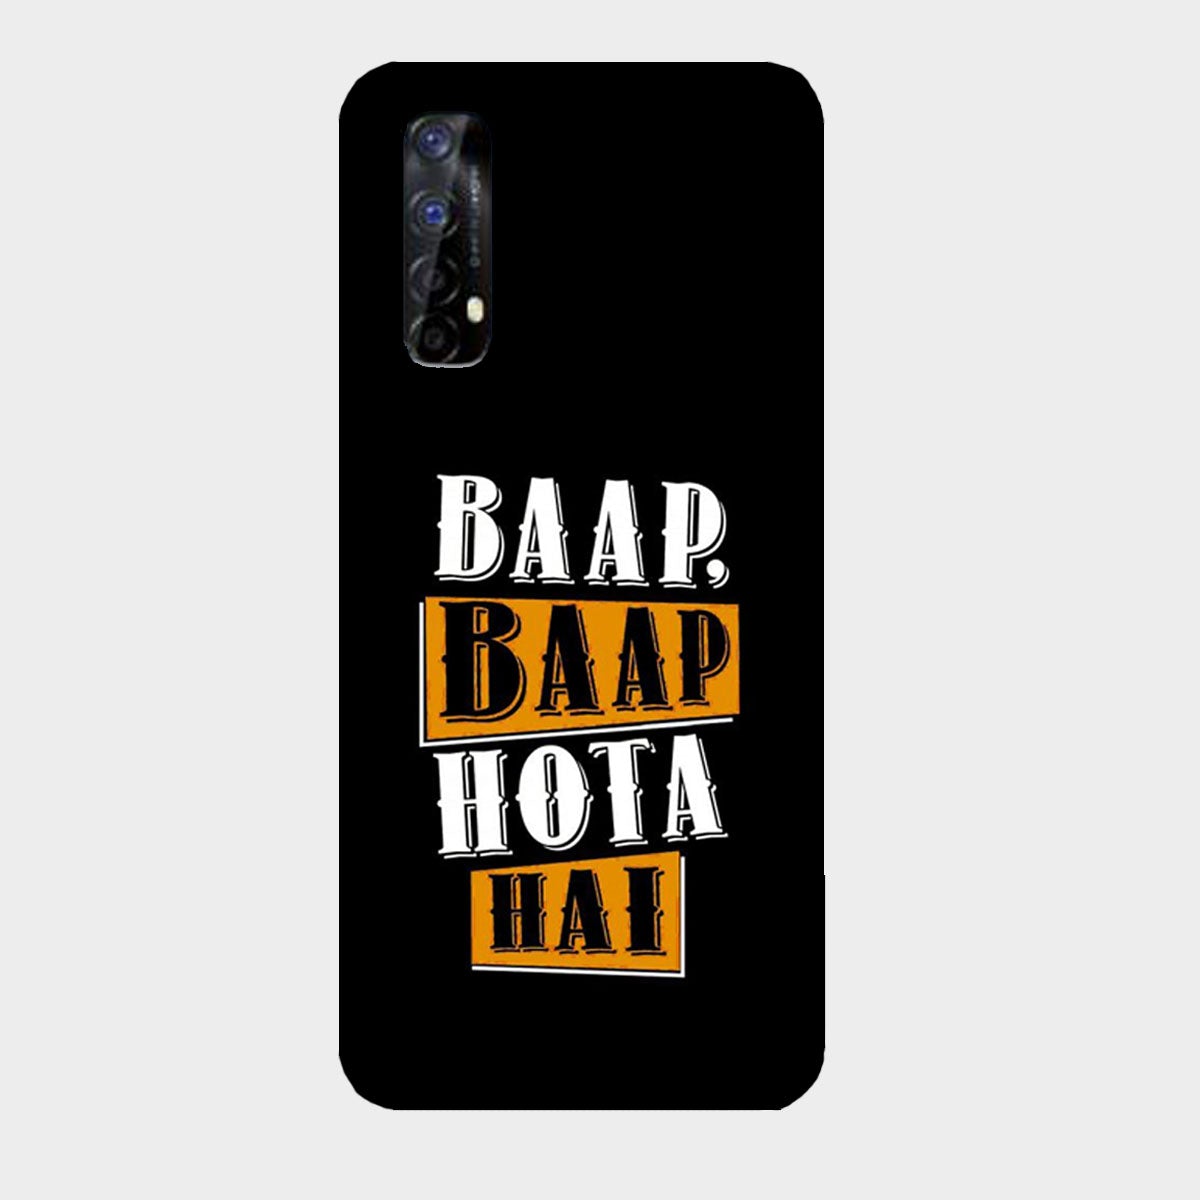 Baap Baap Hota Hai - Mobile Phone Cover - Hard Case